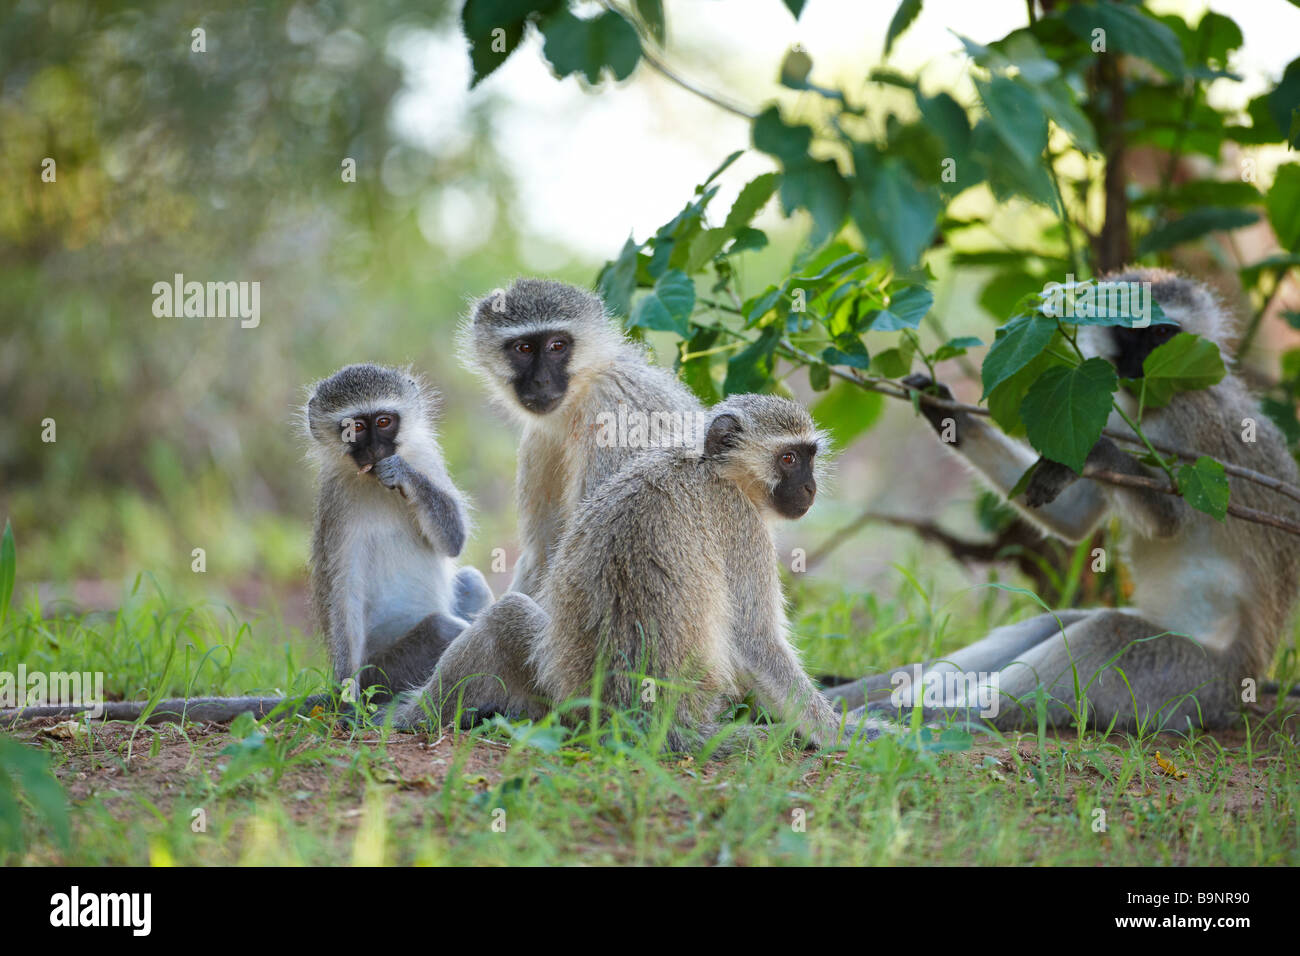 Famiglia di scimmie vervet nella boccola, Kruger National Park, Sud Africa Foto Stock